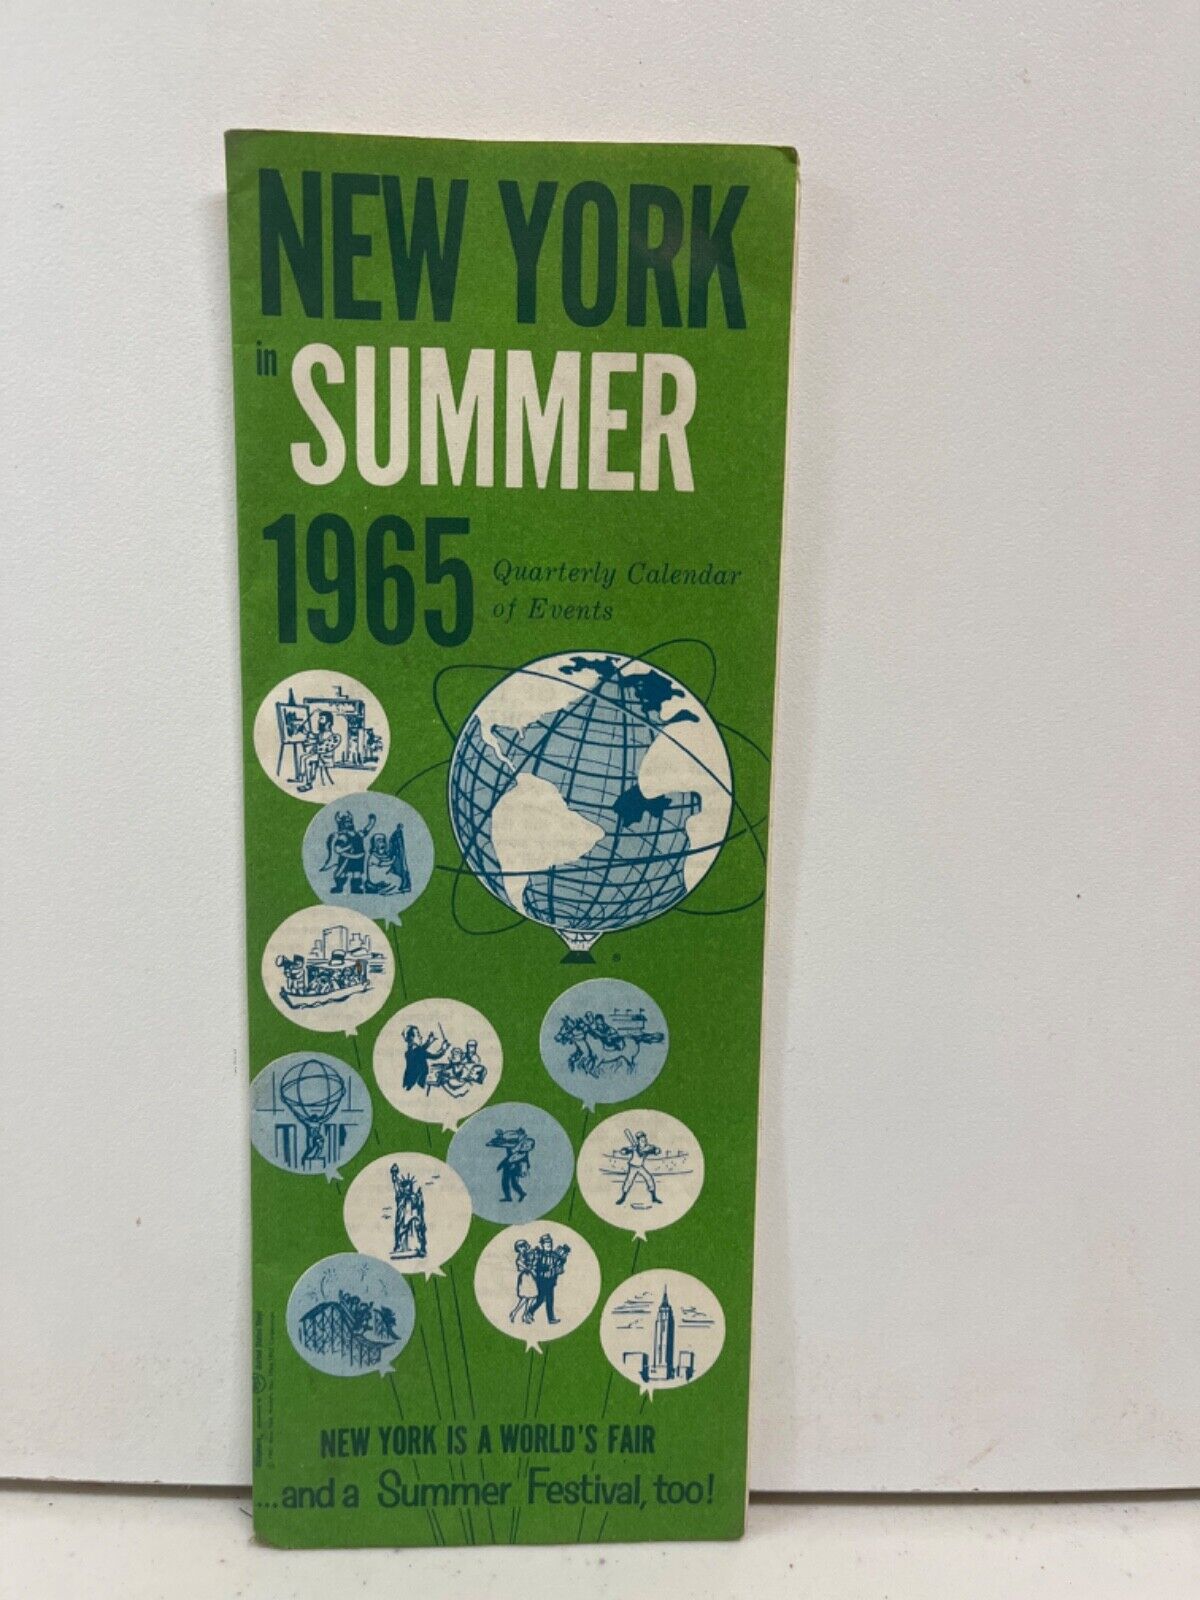 1965 New York Summer Quarterly Calenar of Events Brochure